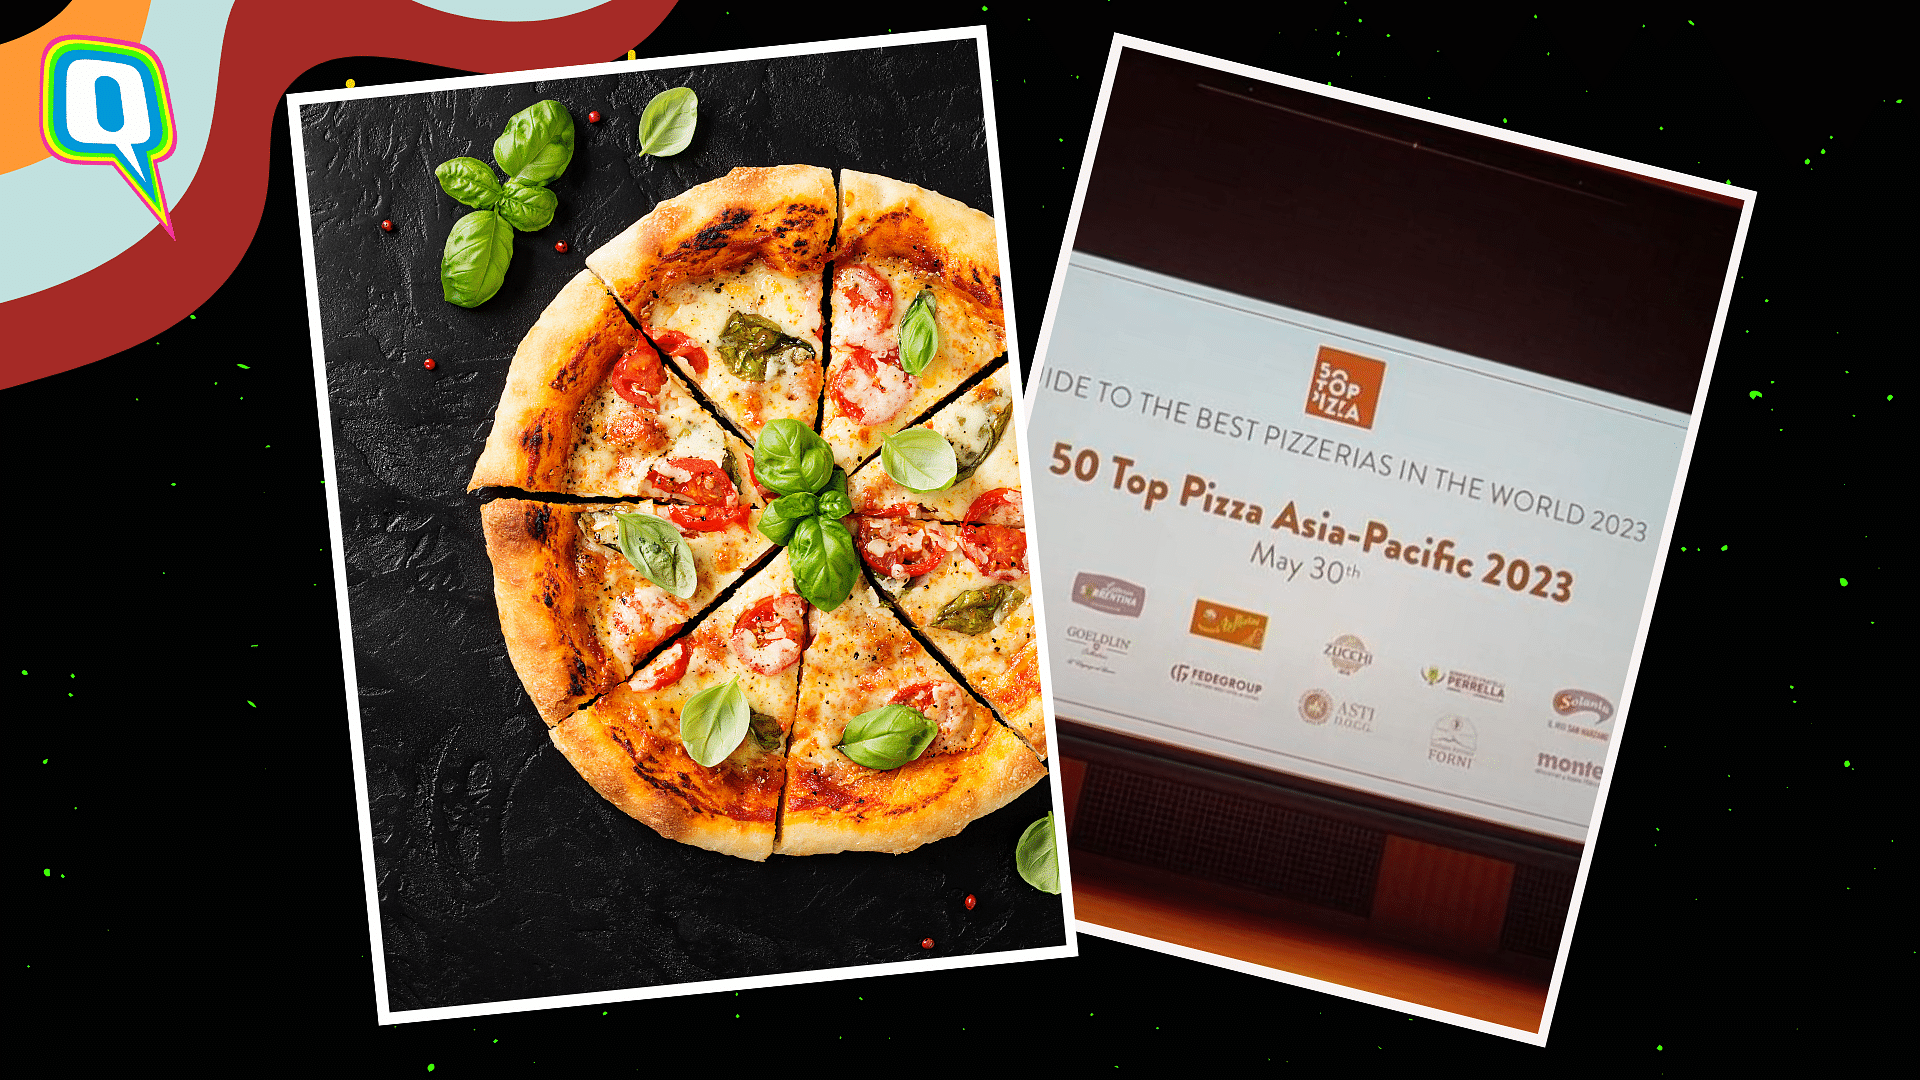 <div class="paragraphs"><p>Two Indian Pizzerias Make It To 2023’s Top-50 Asia Pacific Pizzeria List</p></div>